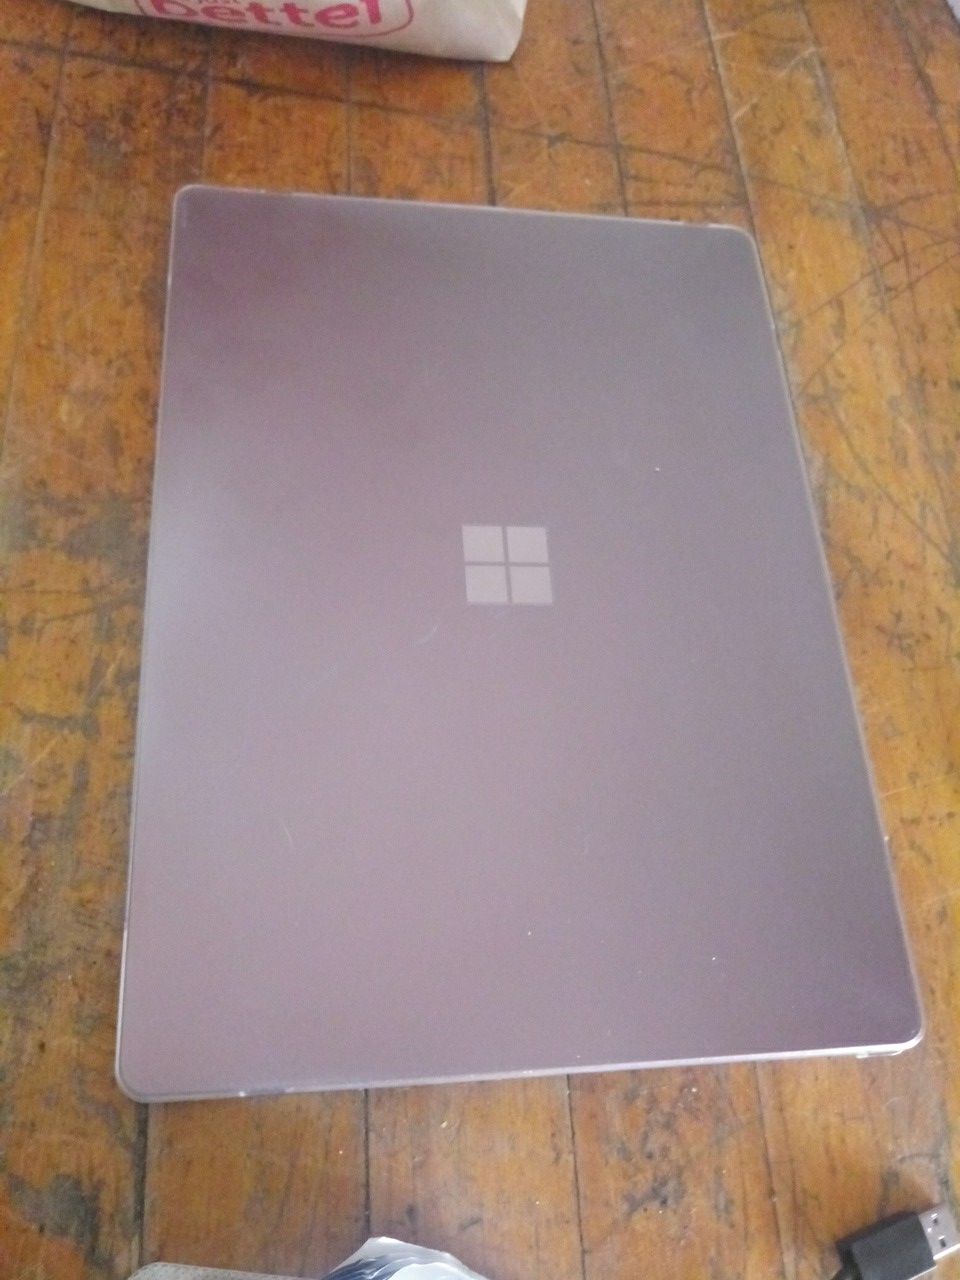 Rare Microsoft Surface